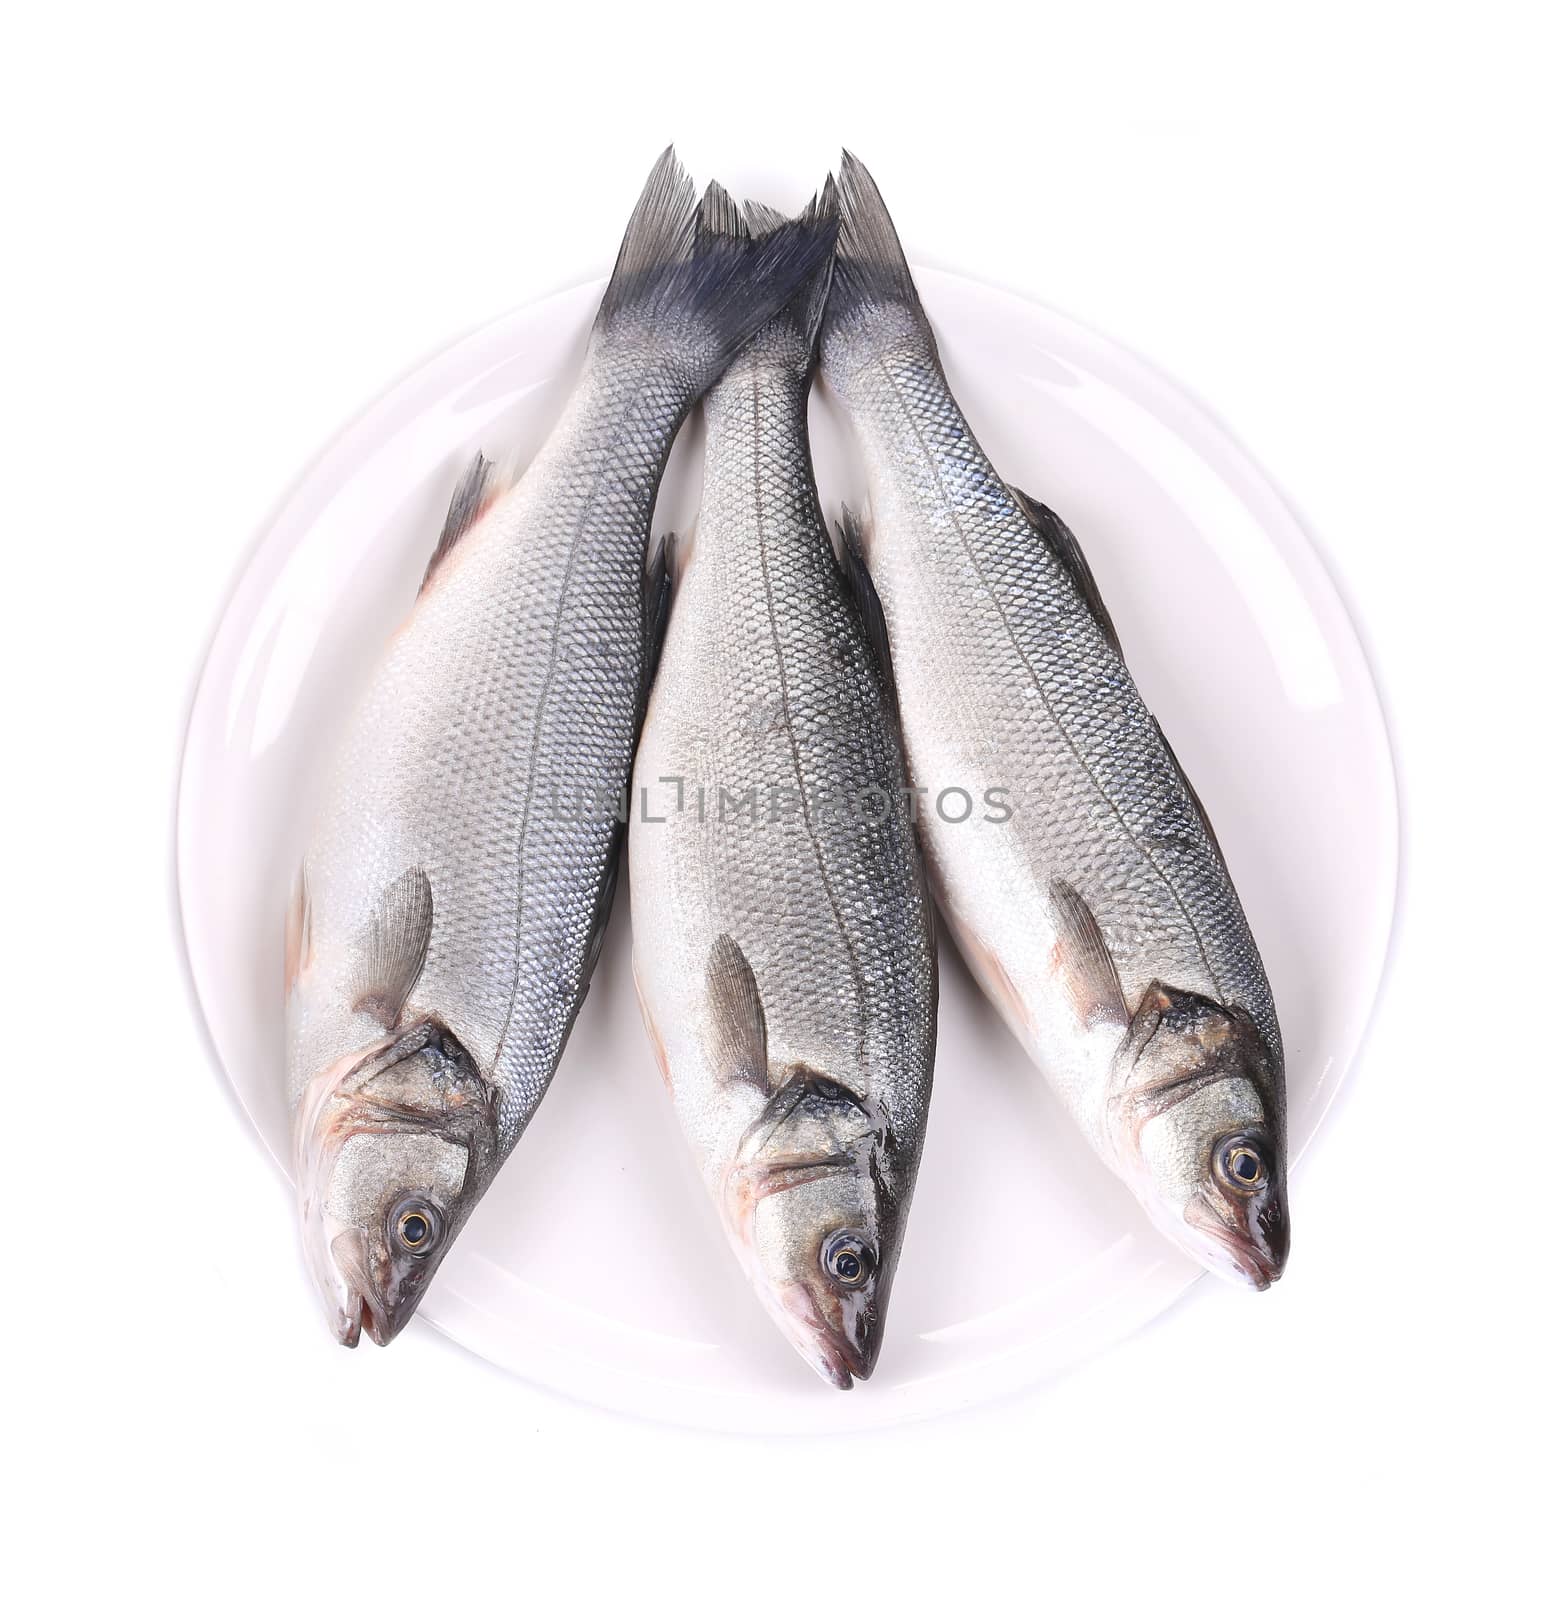 Three fresh seabass fish on plate. by indigolotos